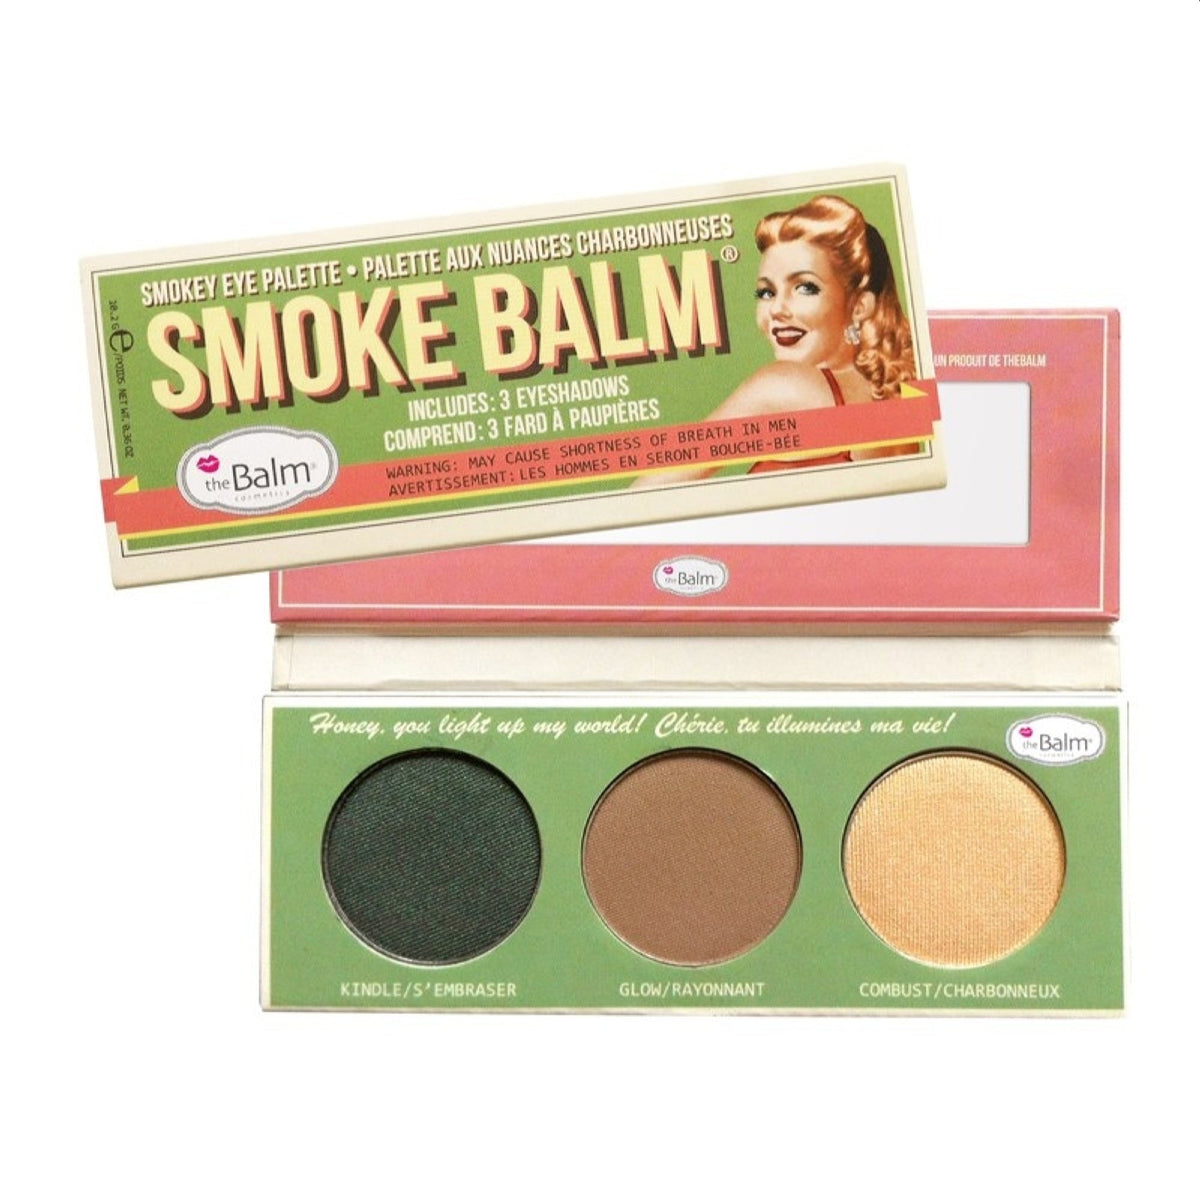 The Balm Smoke Balm 3 Shade Eyeshadow Palette 0.36 Oz (50 Ml)  